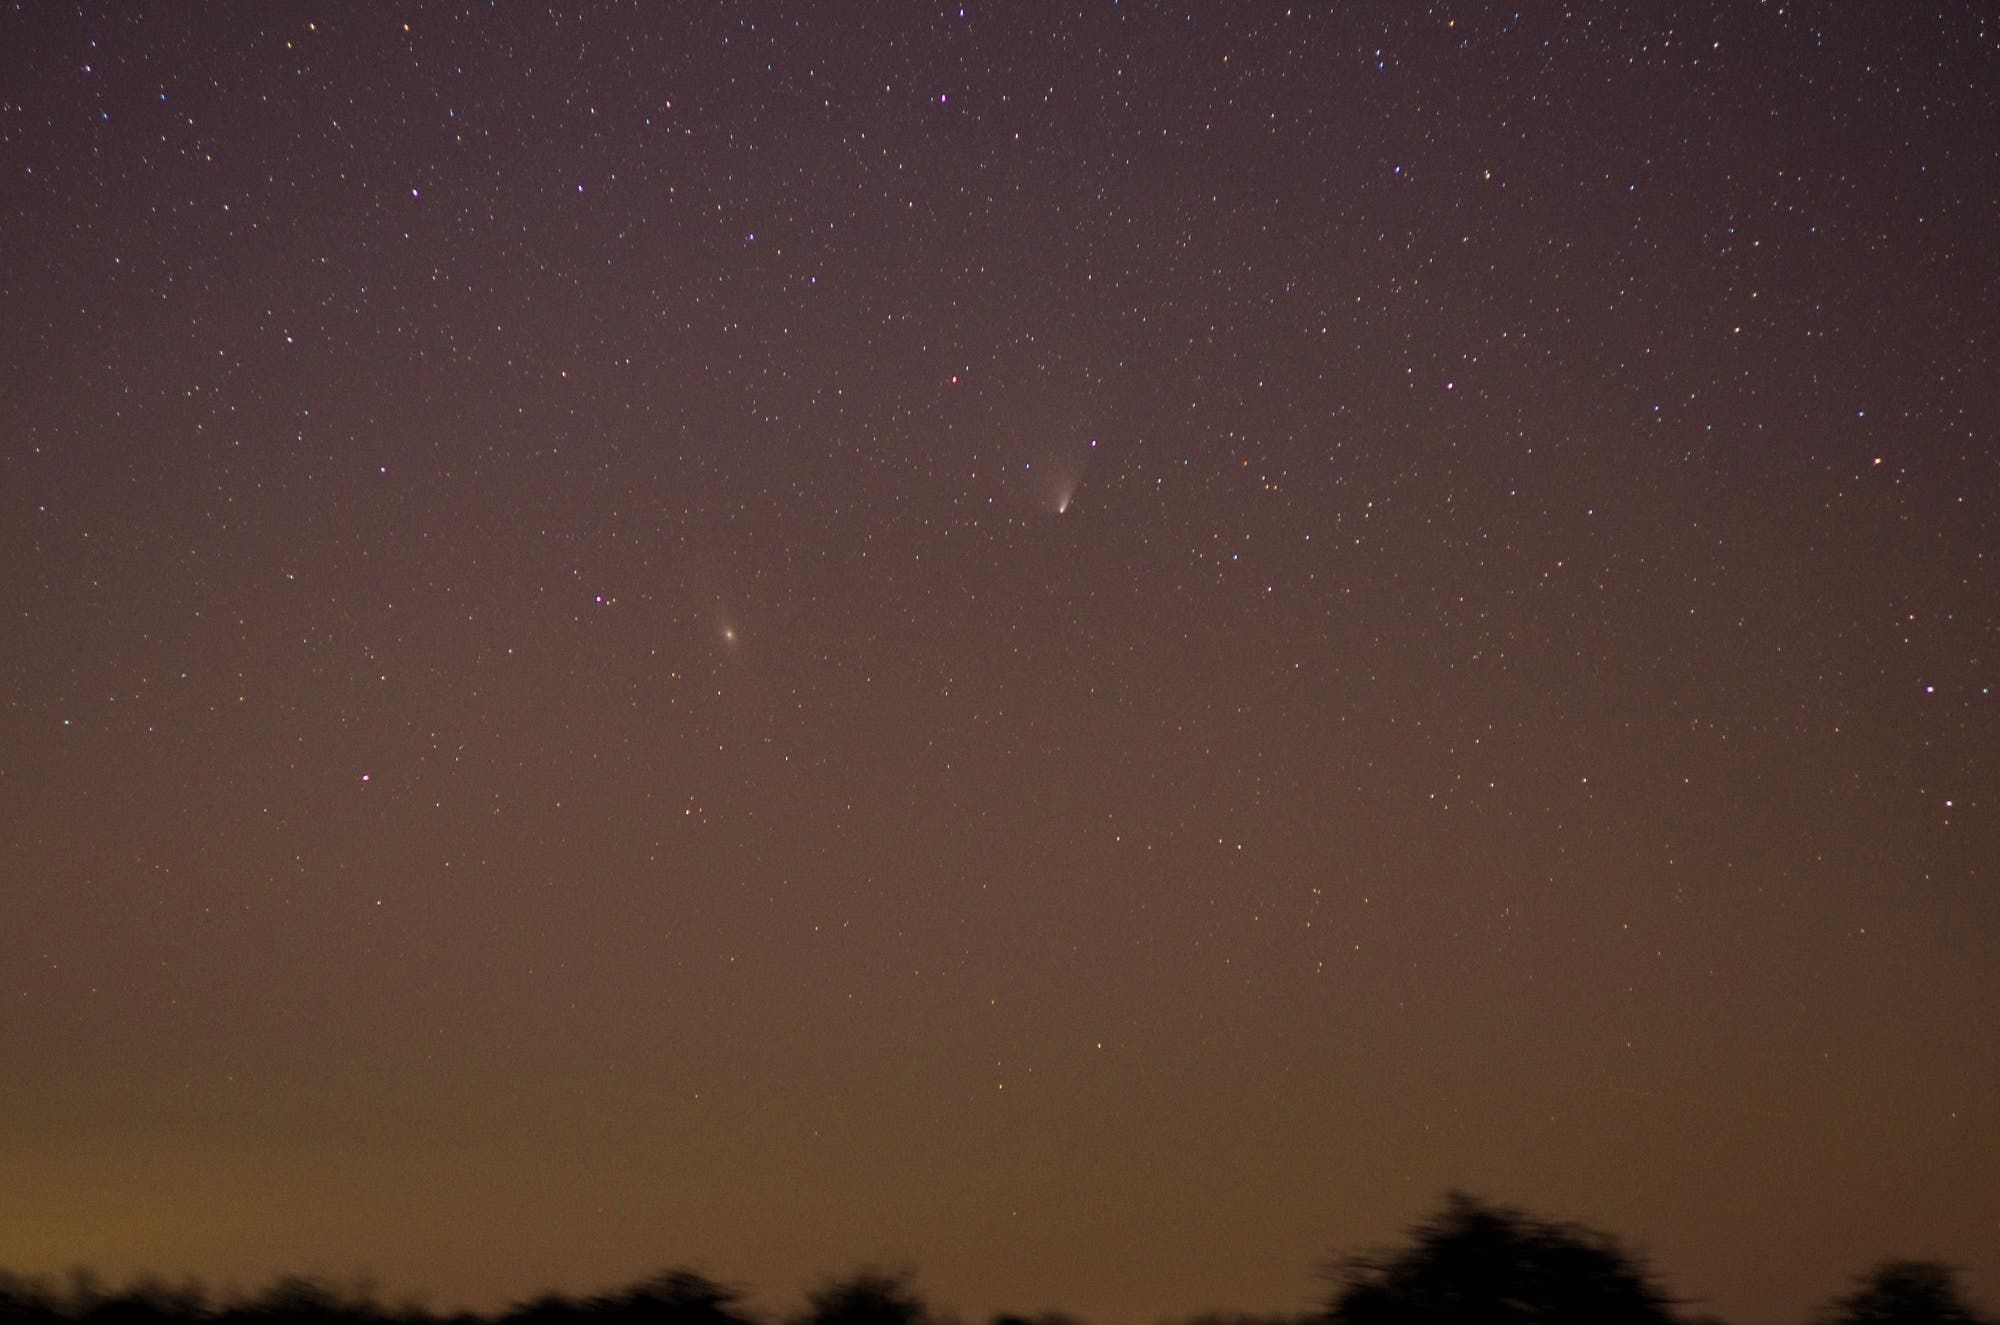 Andromedagalaxie und Komet PANSTARRS